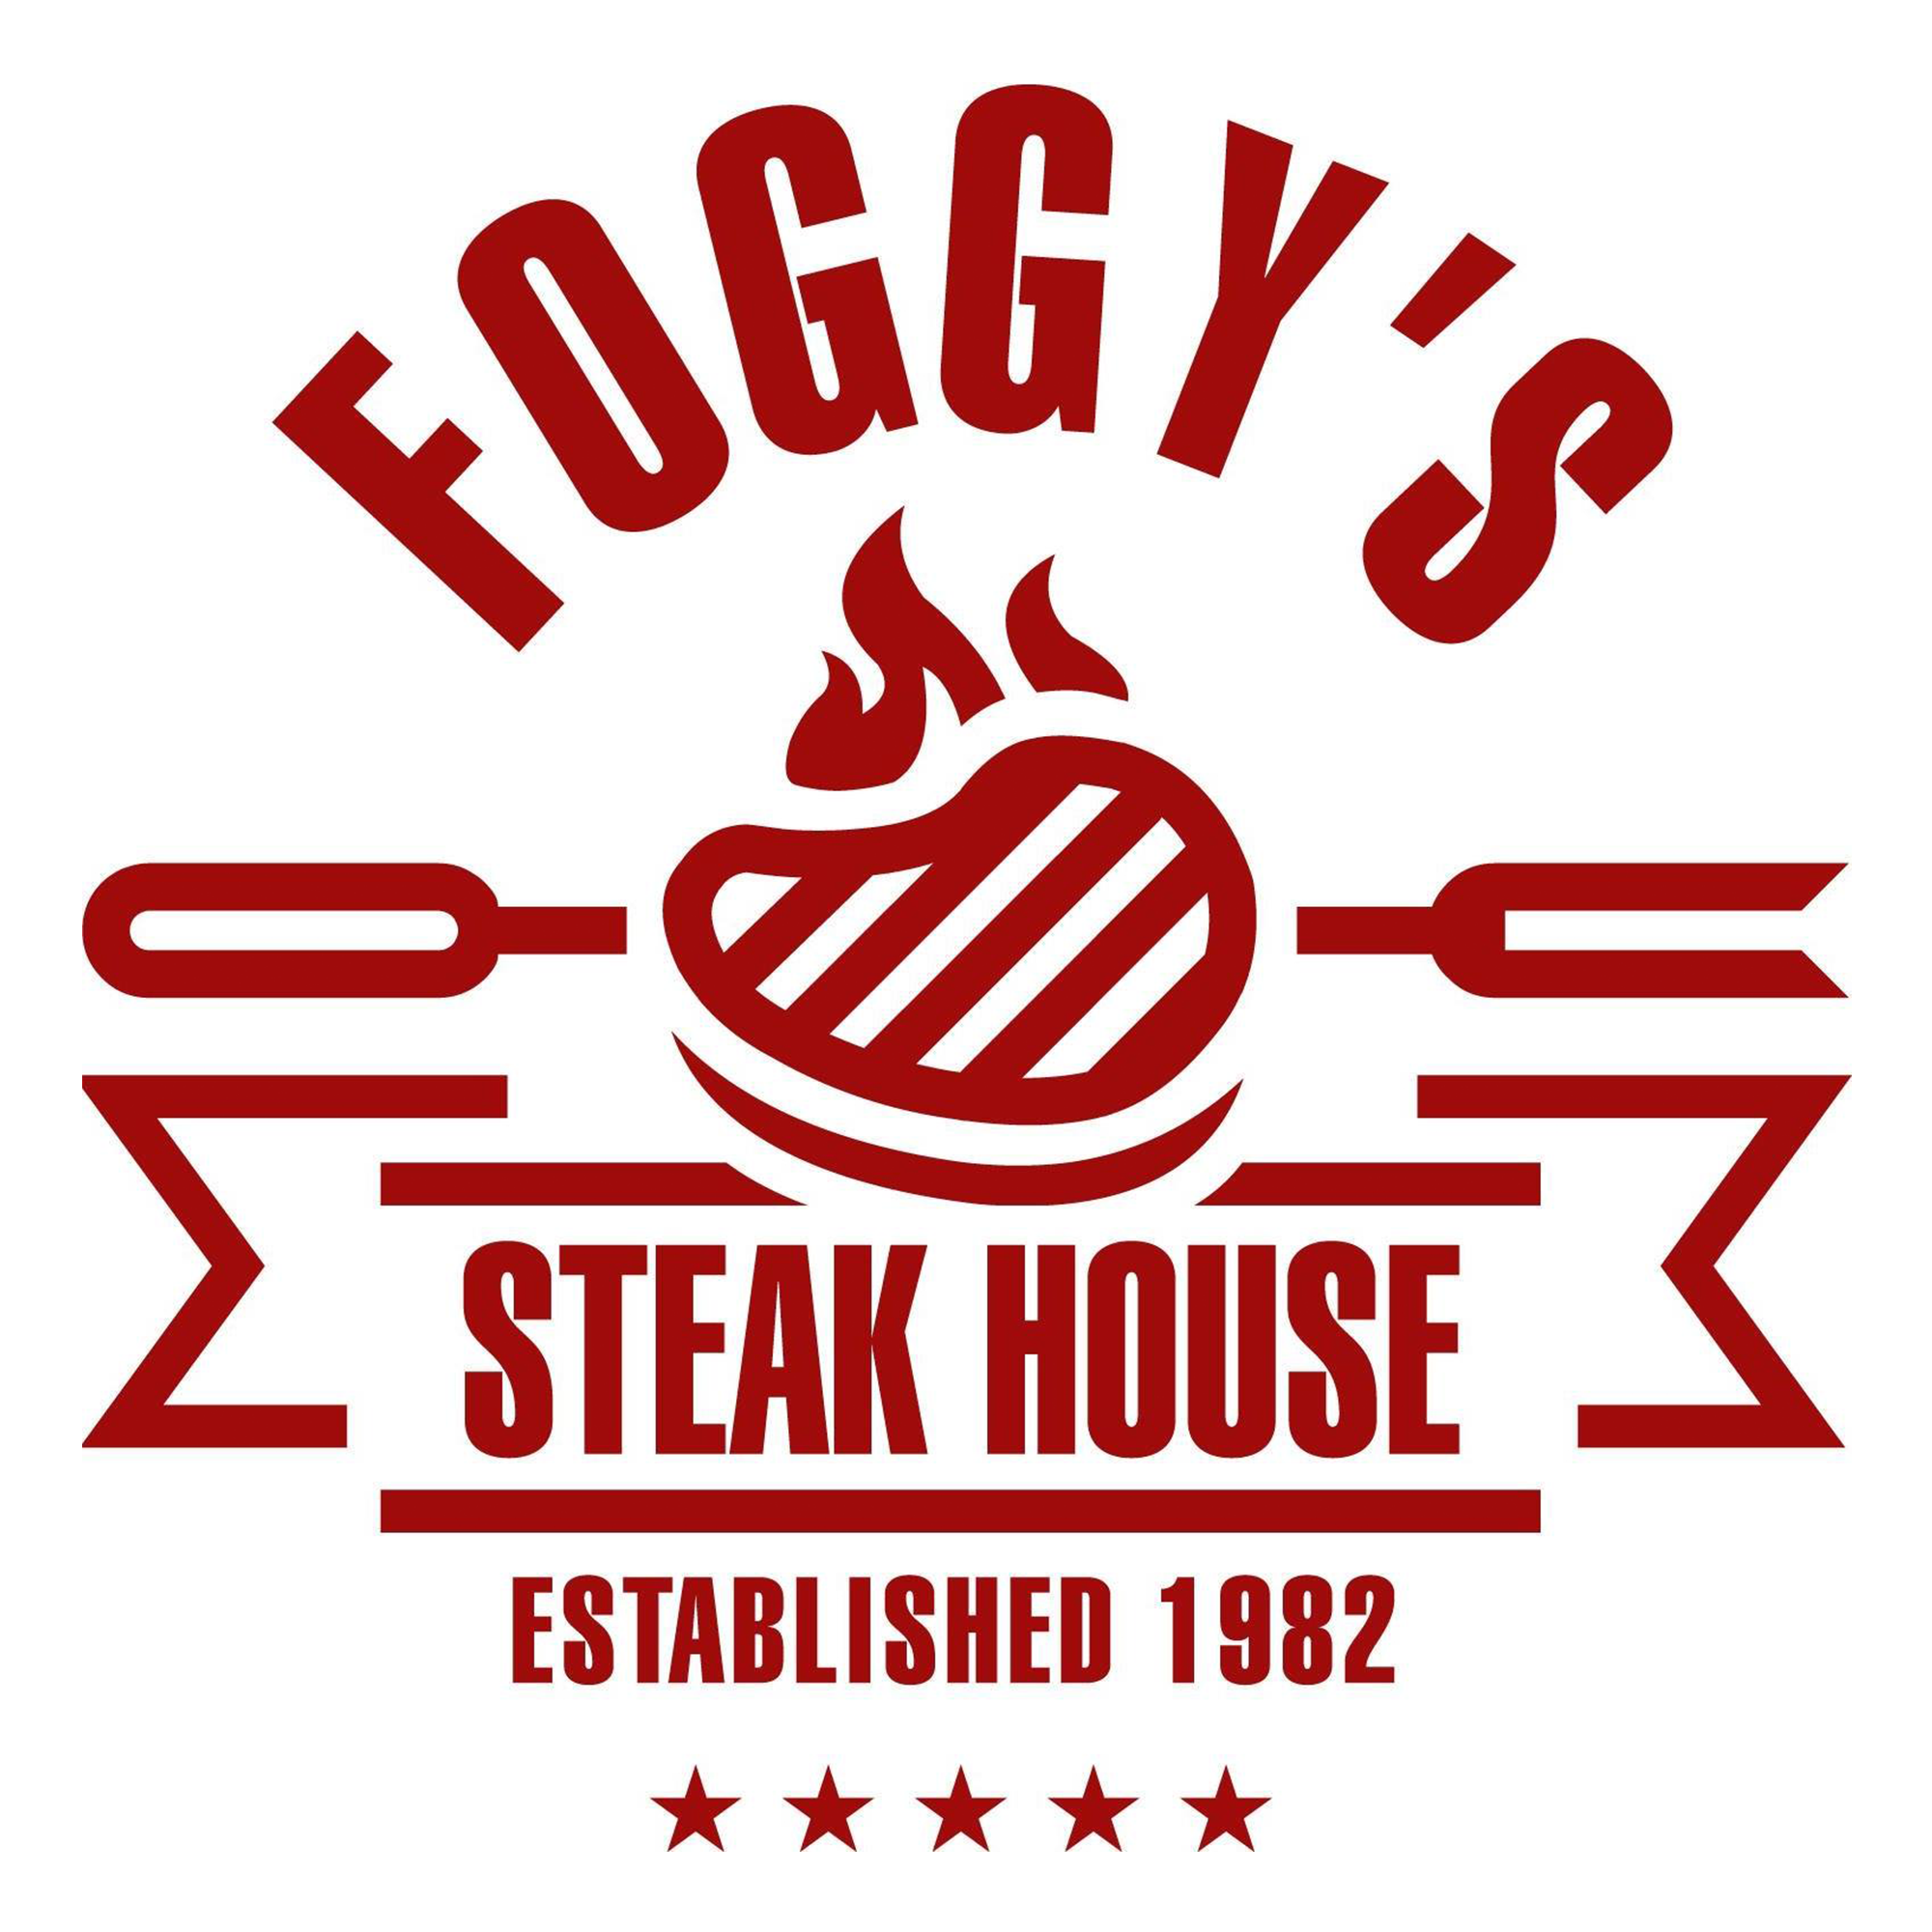 Foggy's Steak House